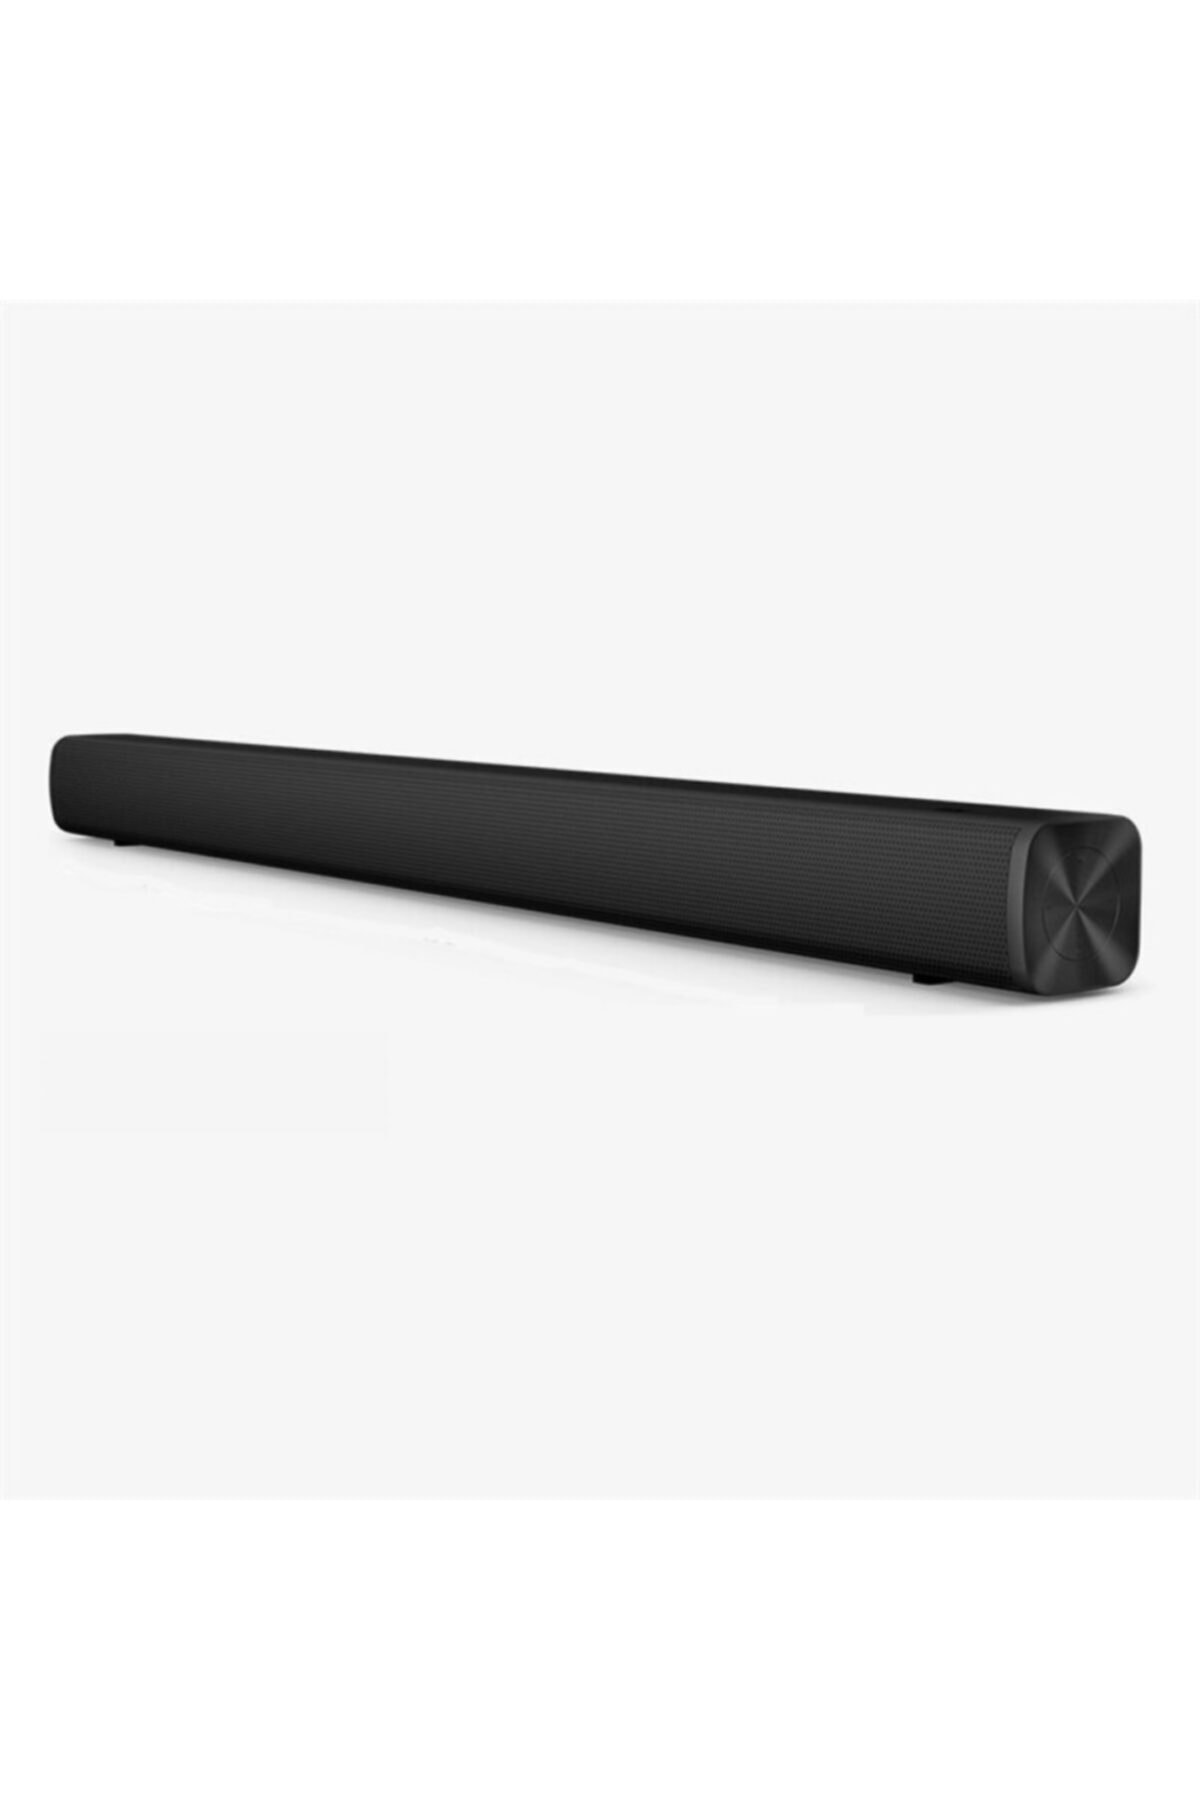 Redmi 30 W Bluetooth 5.0 Soundbar